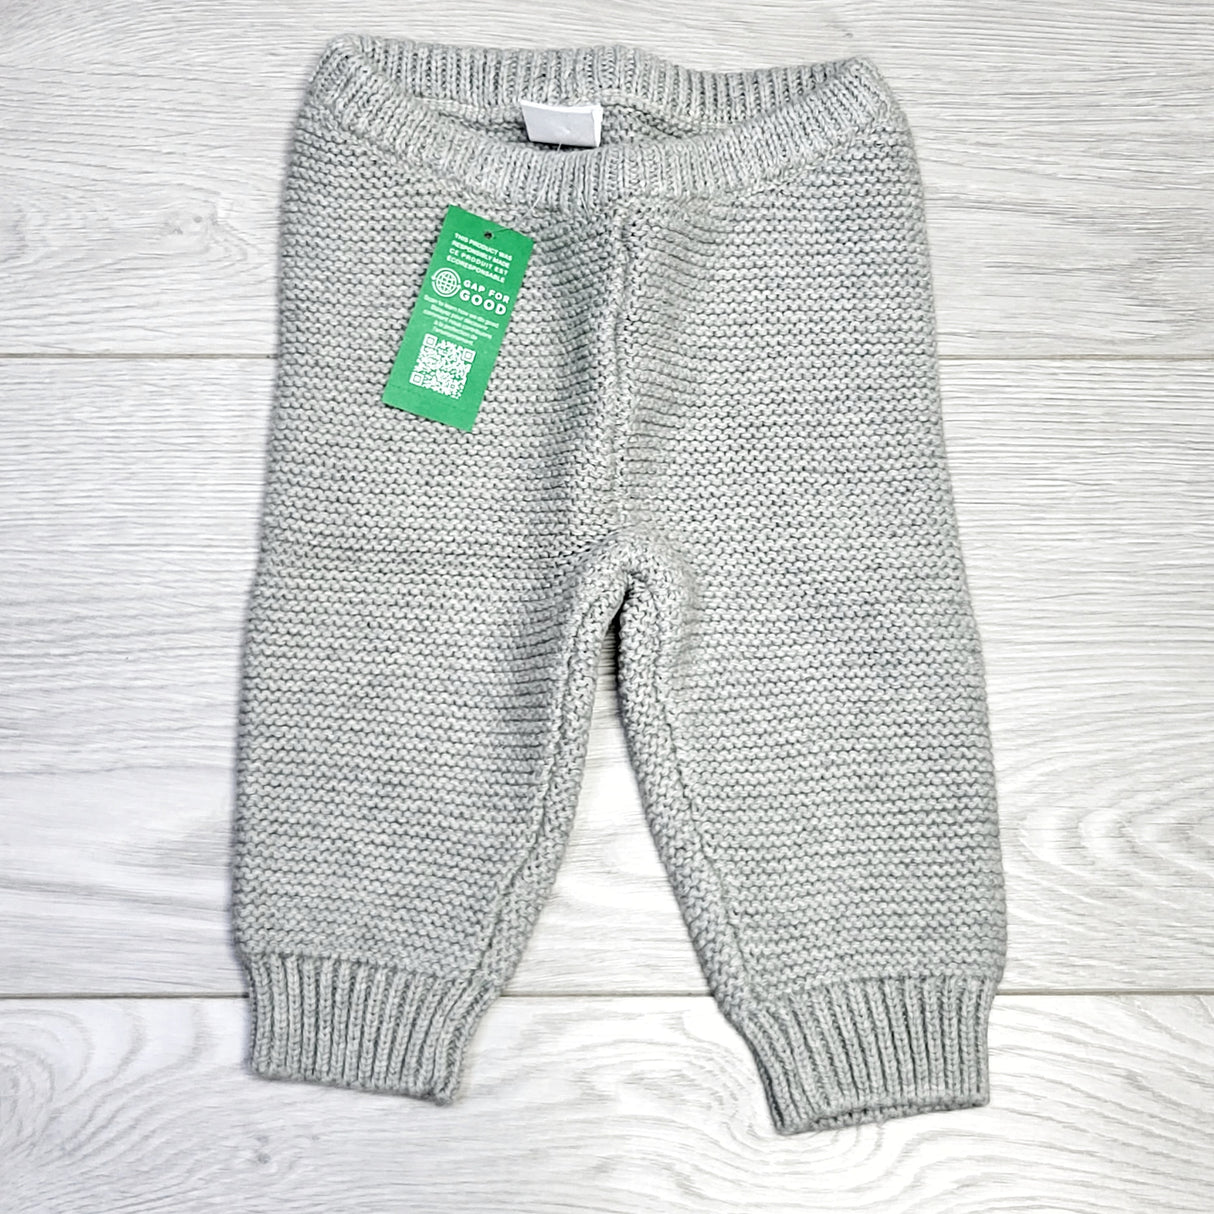 MSNDS11 - NEW - Gap grey knit pants. Size 0-3 months